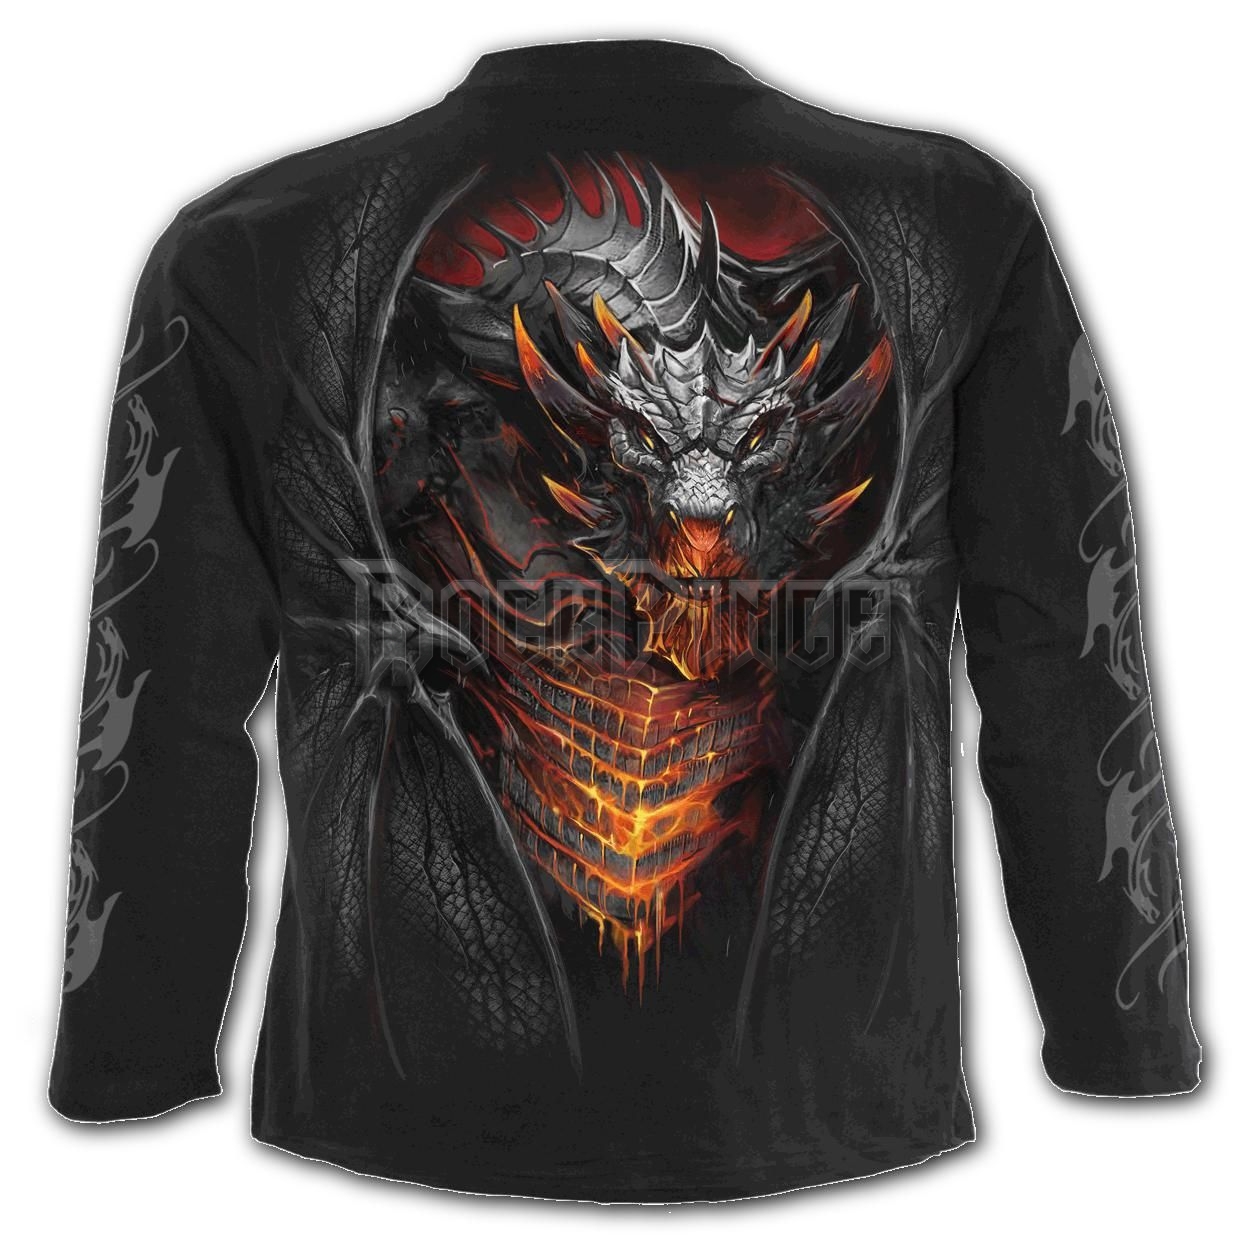 DRACONIS - Longsleeve T-Shirt Black (Plain) - L046M301